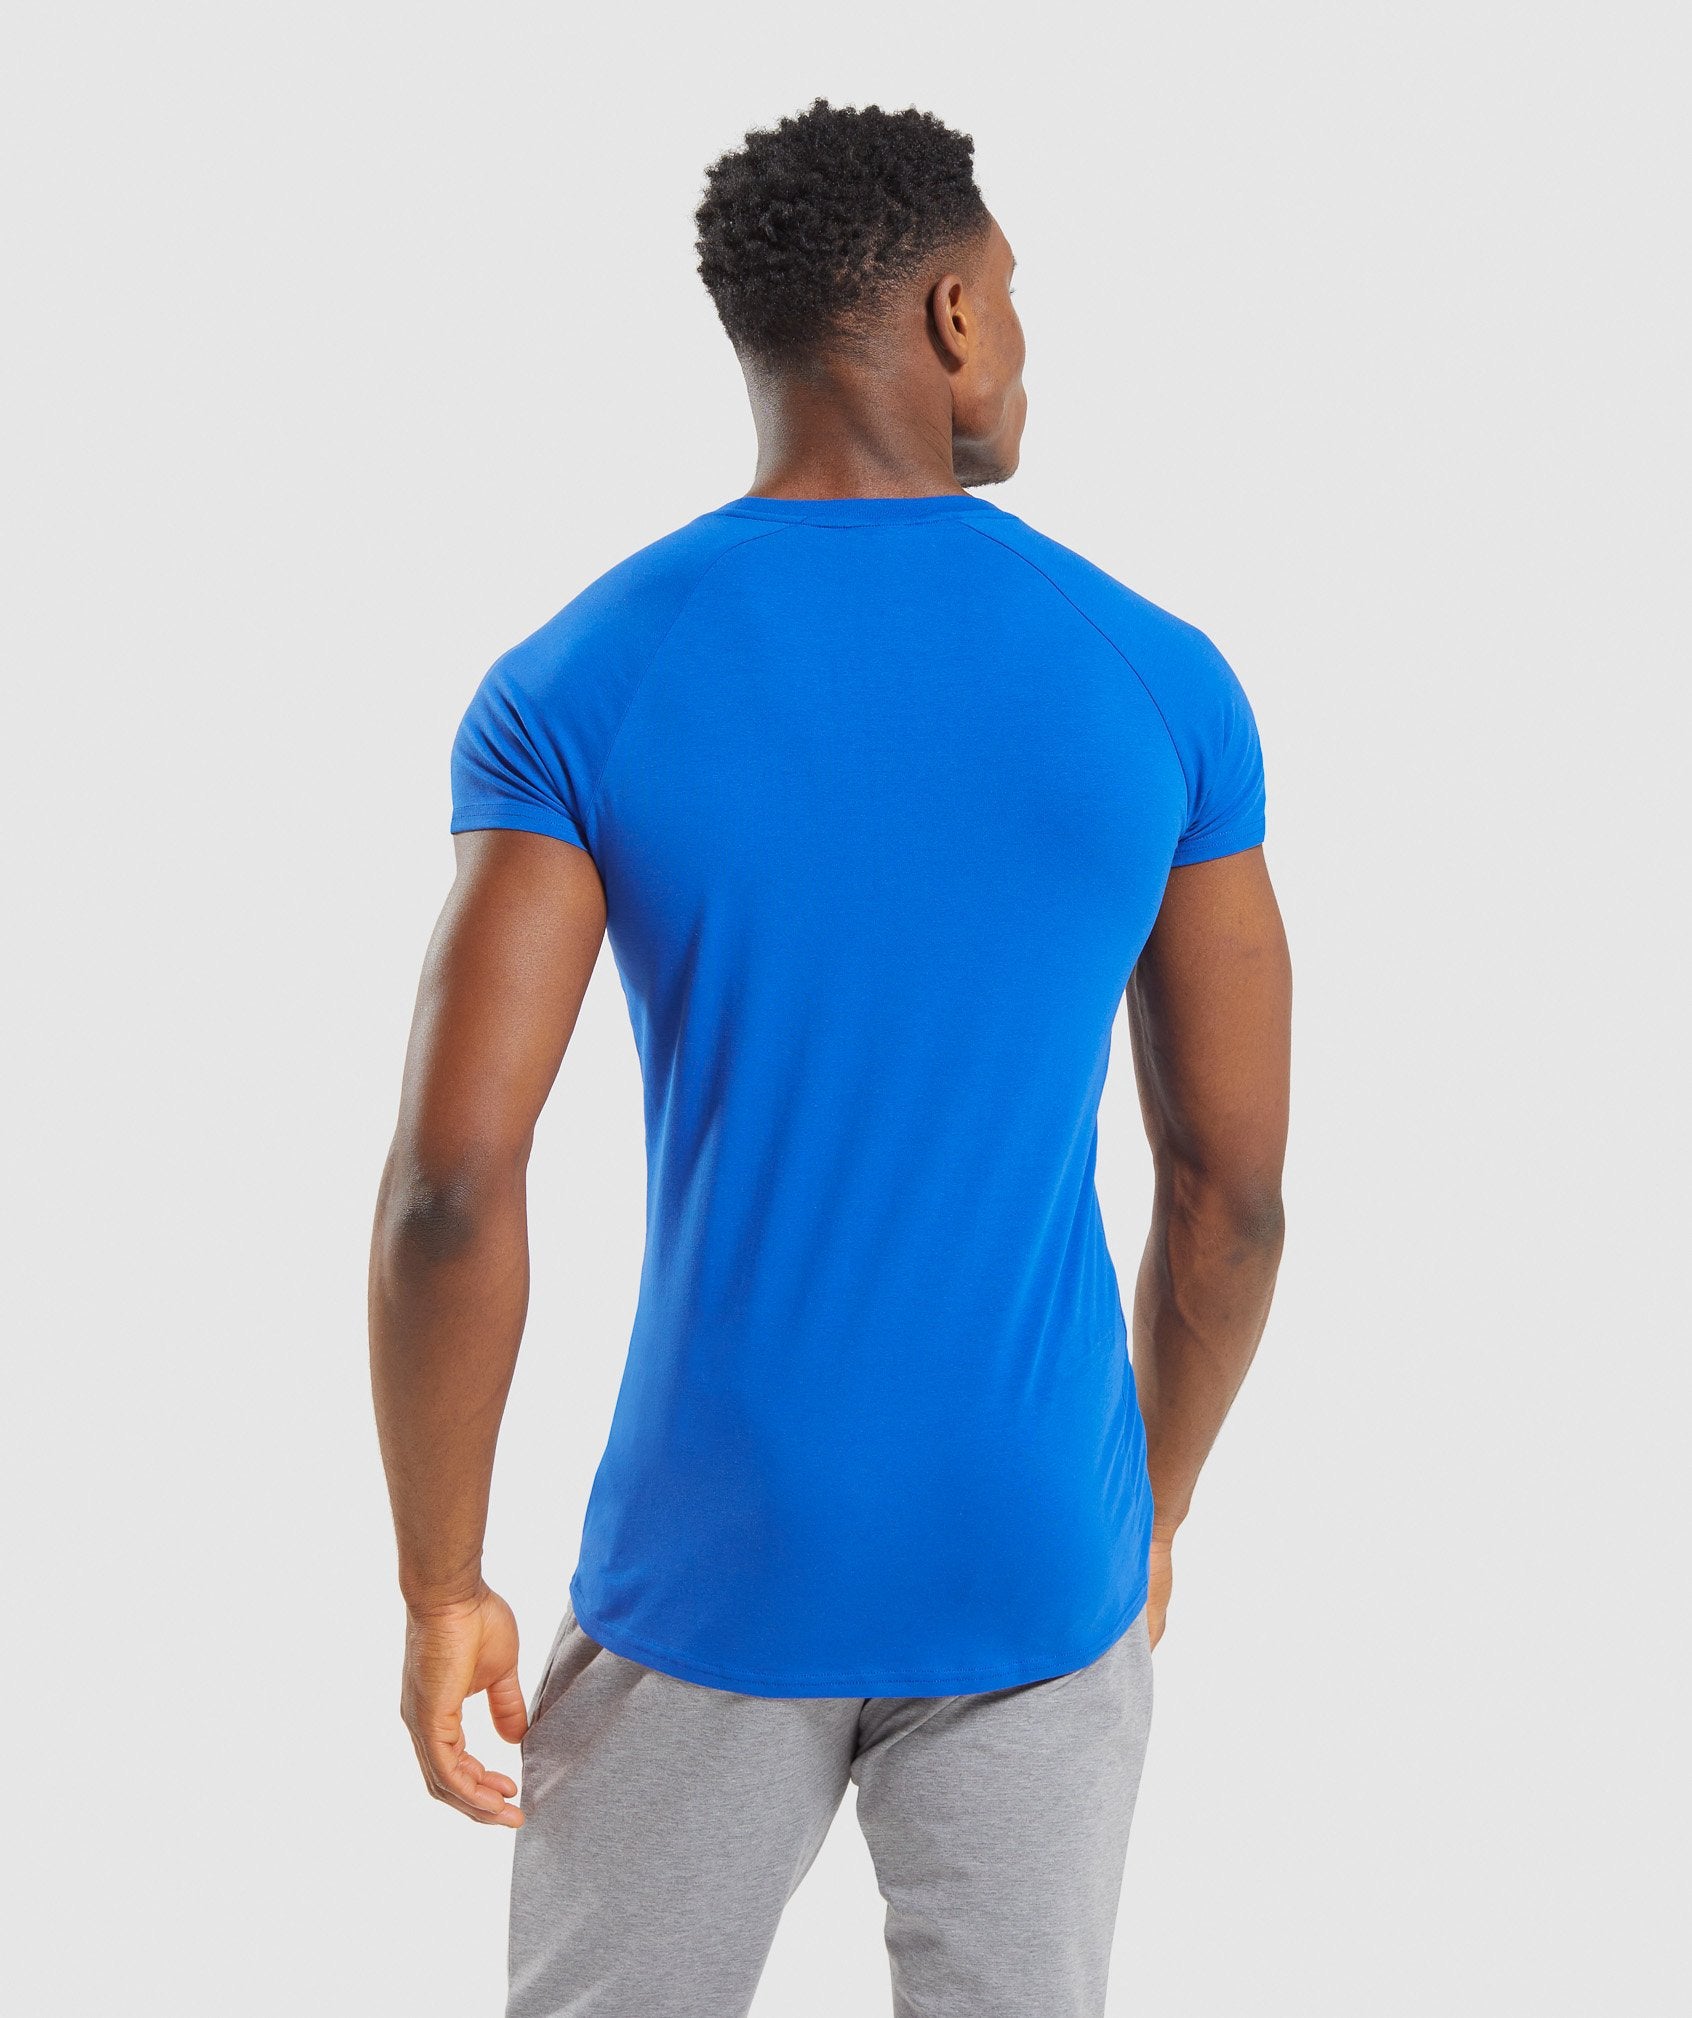 Apollo T-Shirt in Blue - view 2